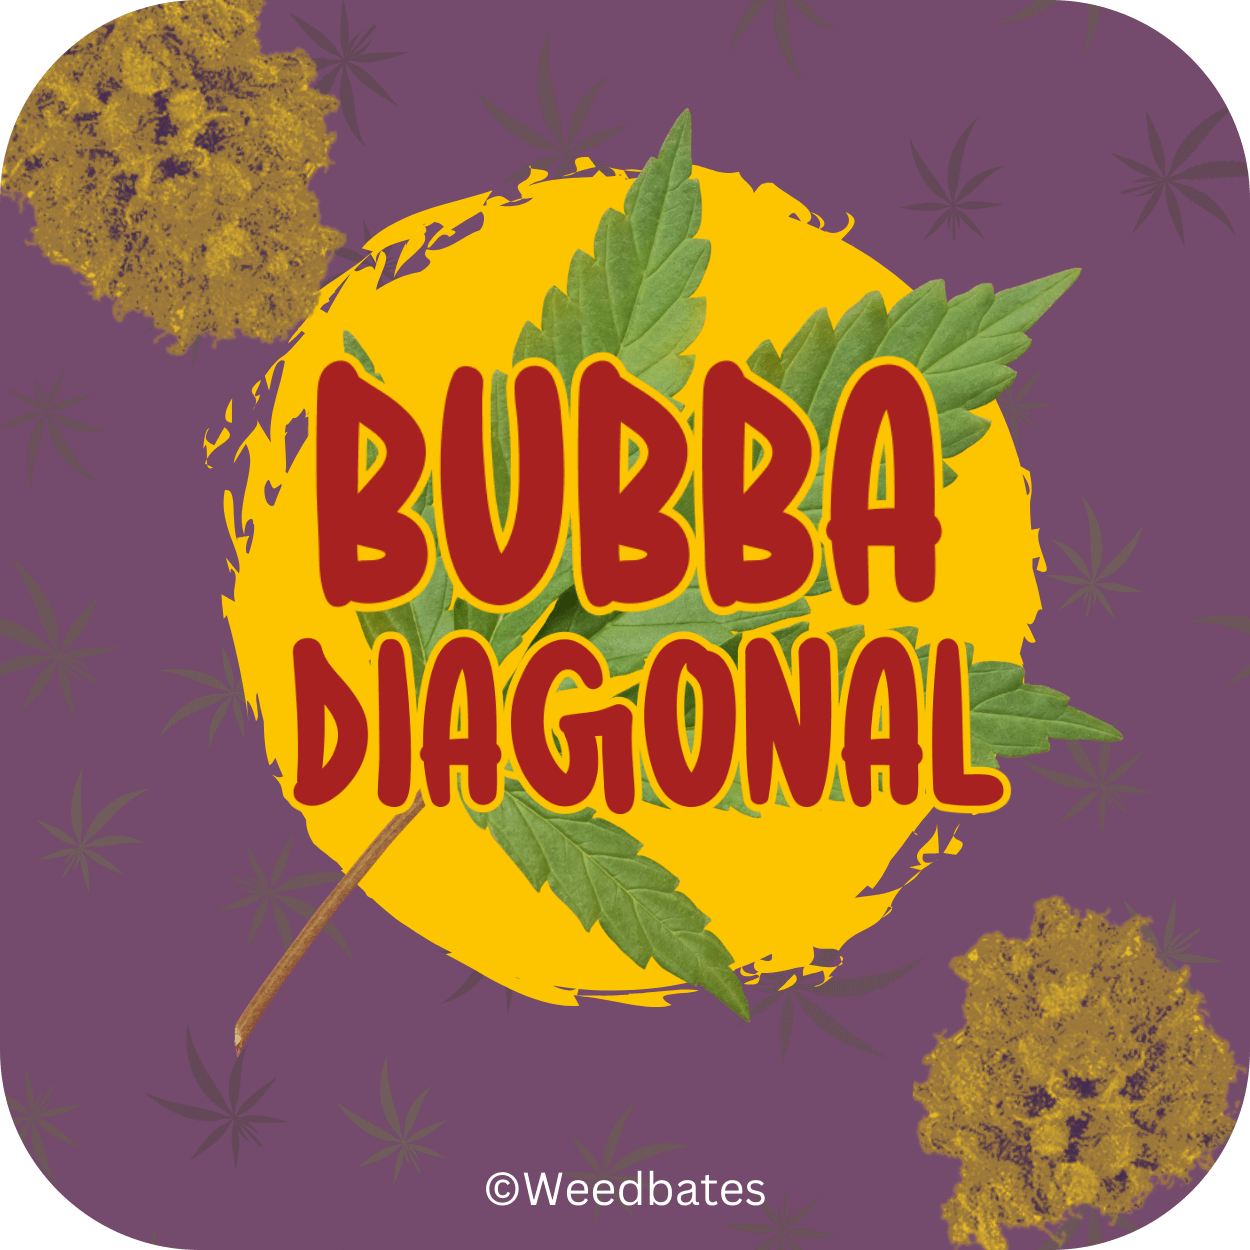 Bubba Diagonal strain